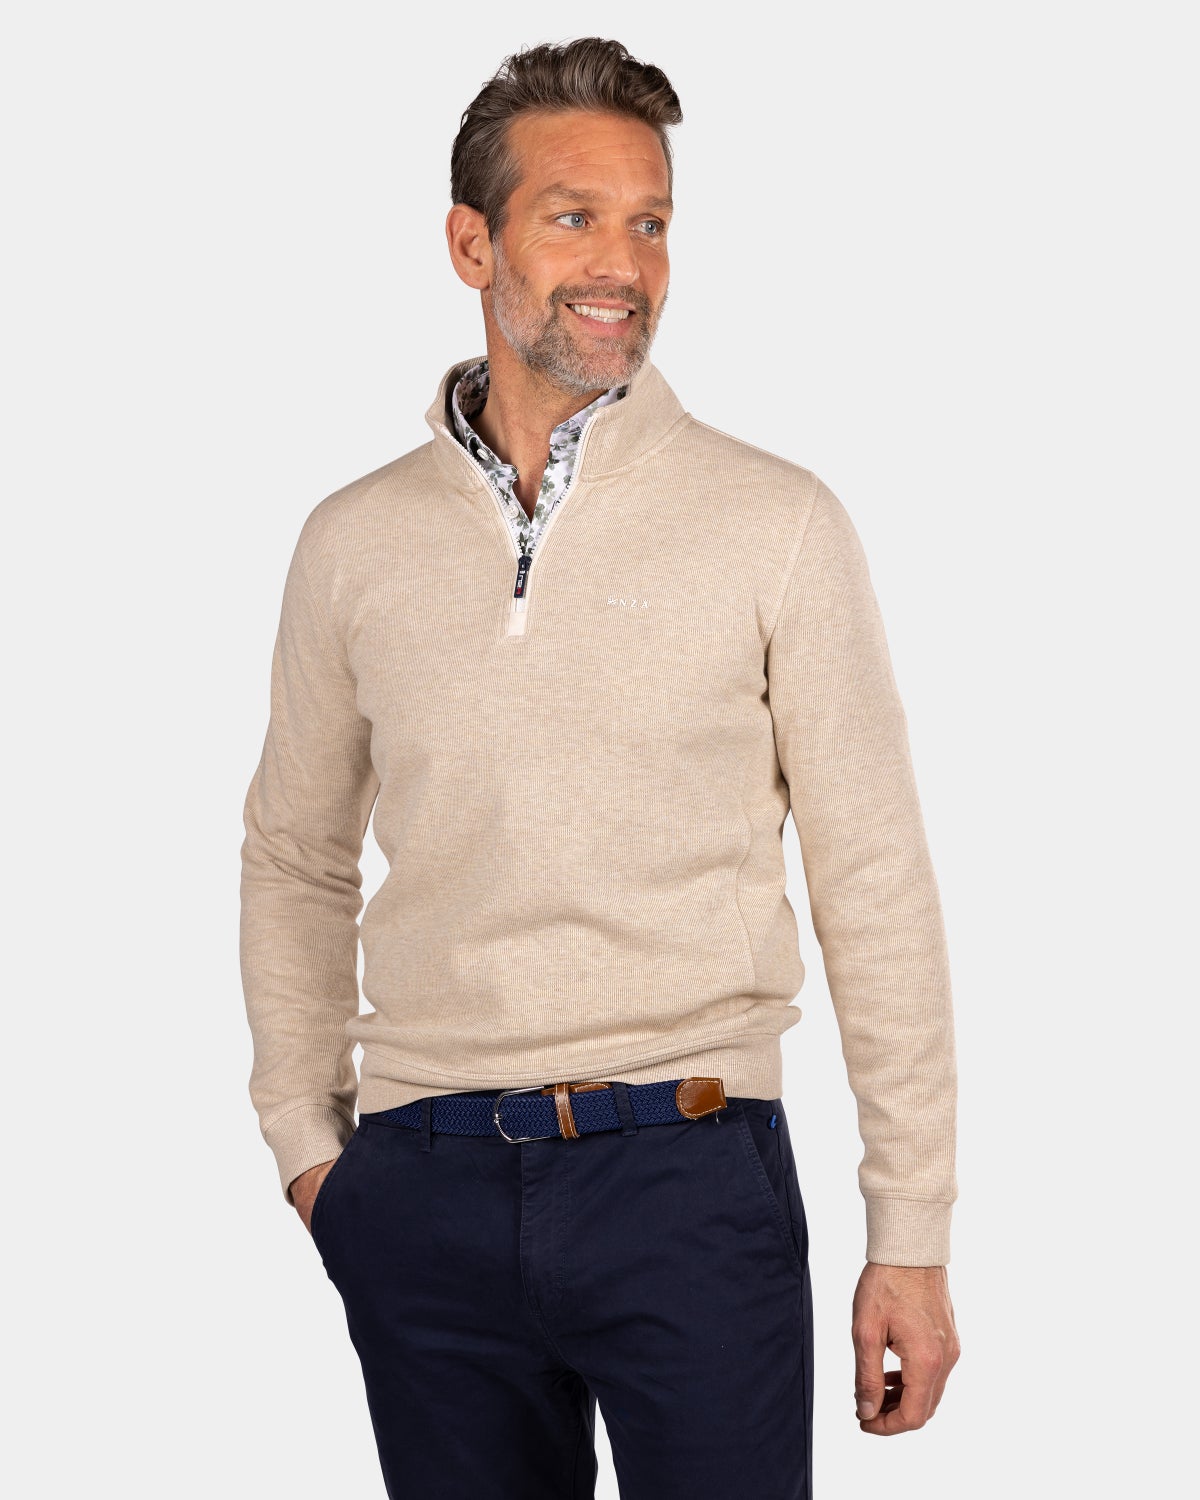 Beigefarbener Sweatshirt mit halbem Reißverschluss - Oat Sand